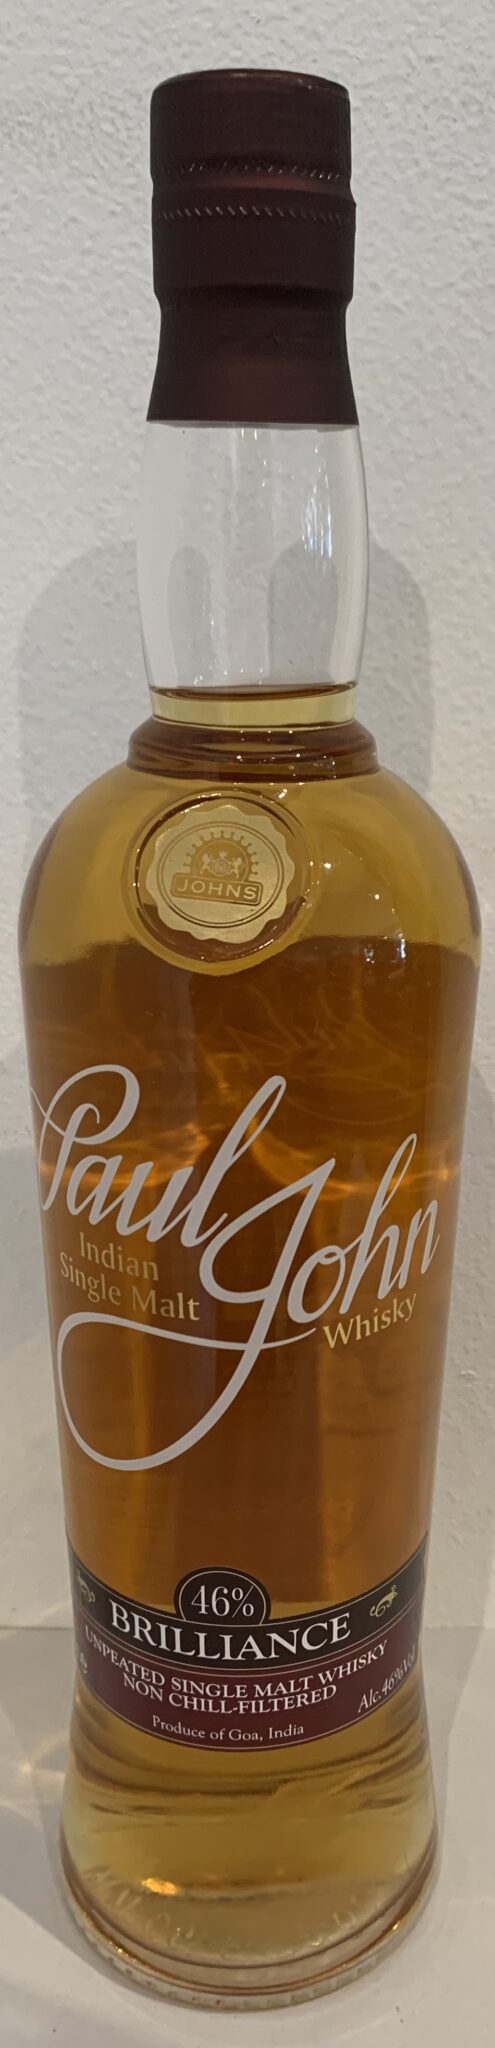 Whisky - Paul John - Indian Single malt - 70cl